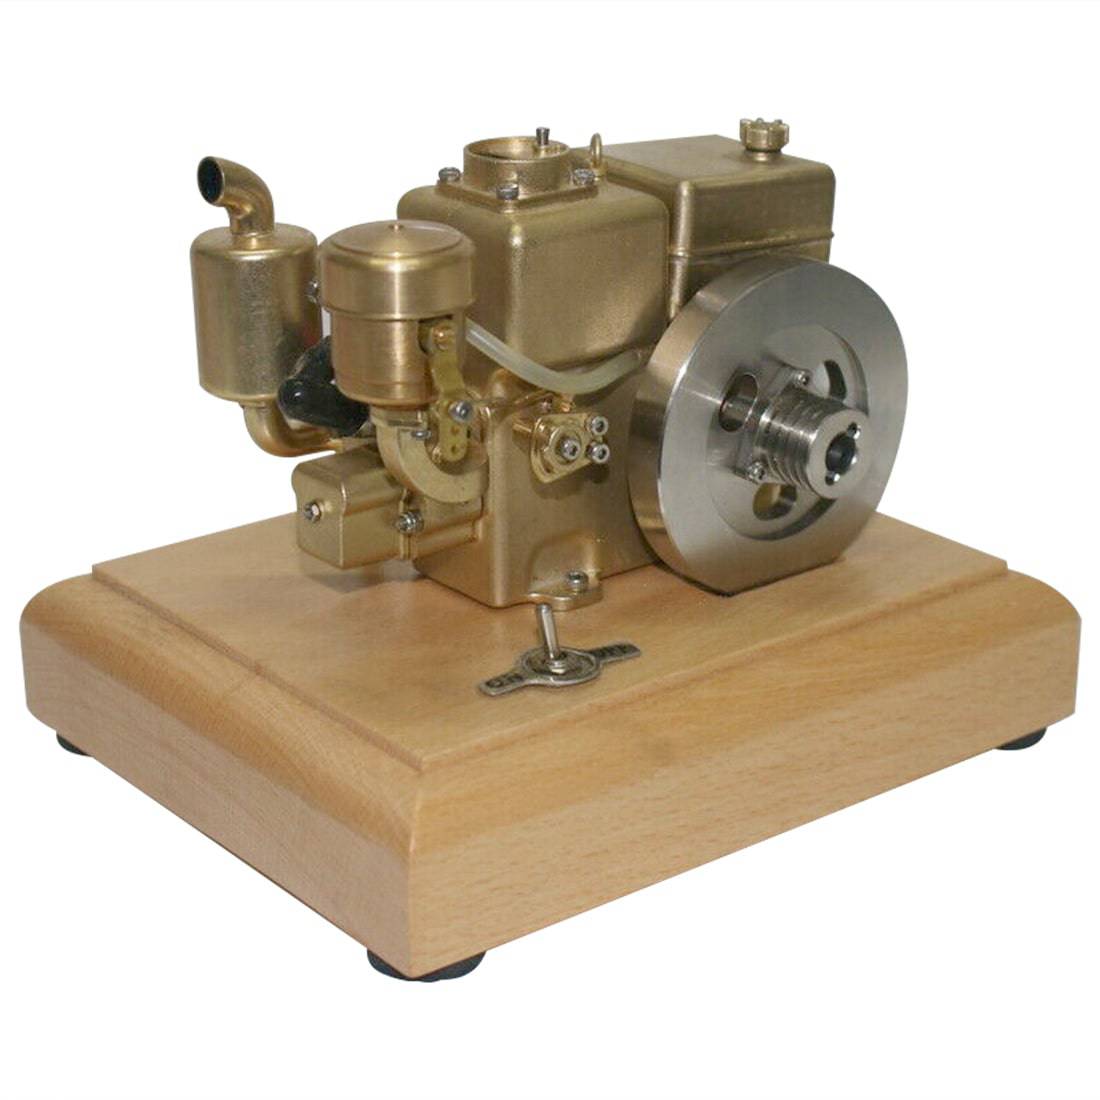 1.9cc Miniature Gasoline Model Engine Old Tractor Engine Four-stroke Water-cooled Internal Combustion Engine Model - stirlingkit